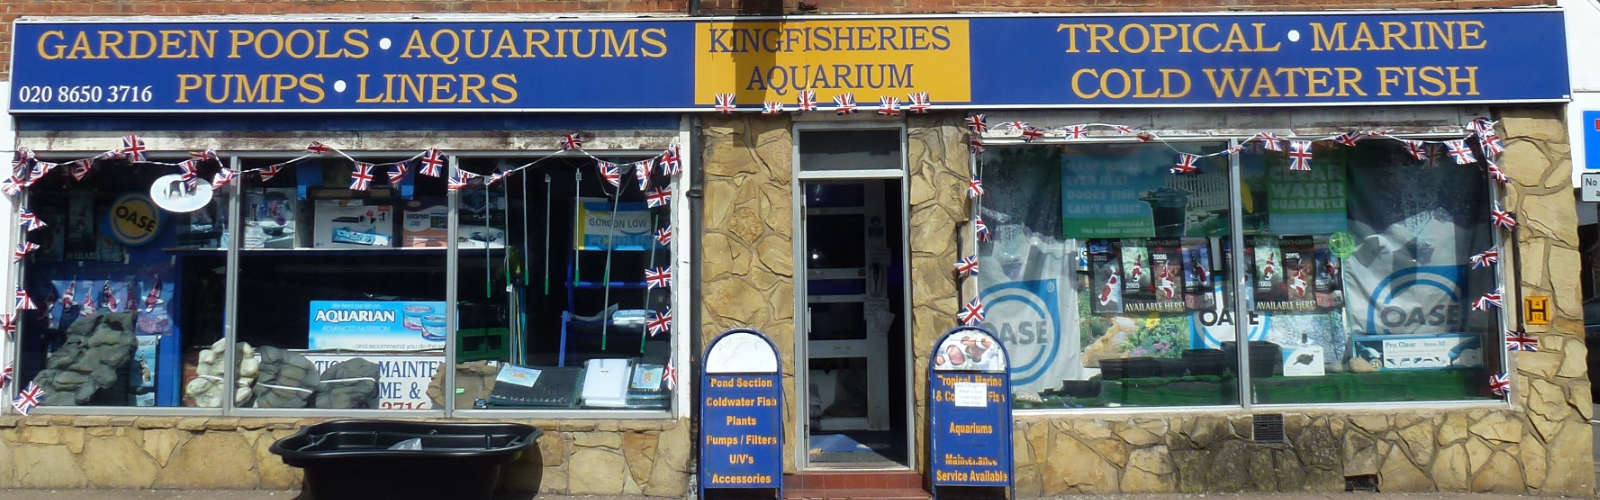 Welcome to Kingfisheries Aquarium Ltd